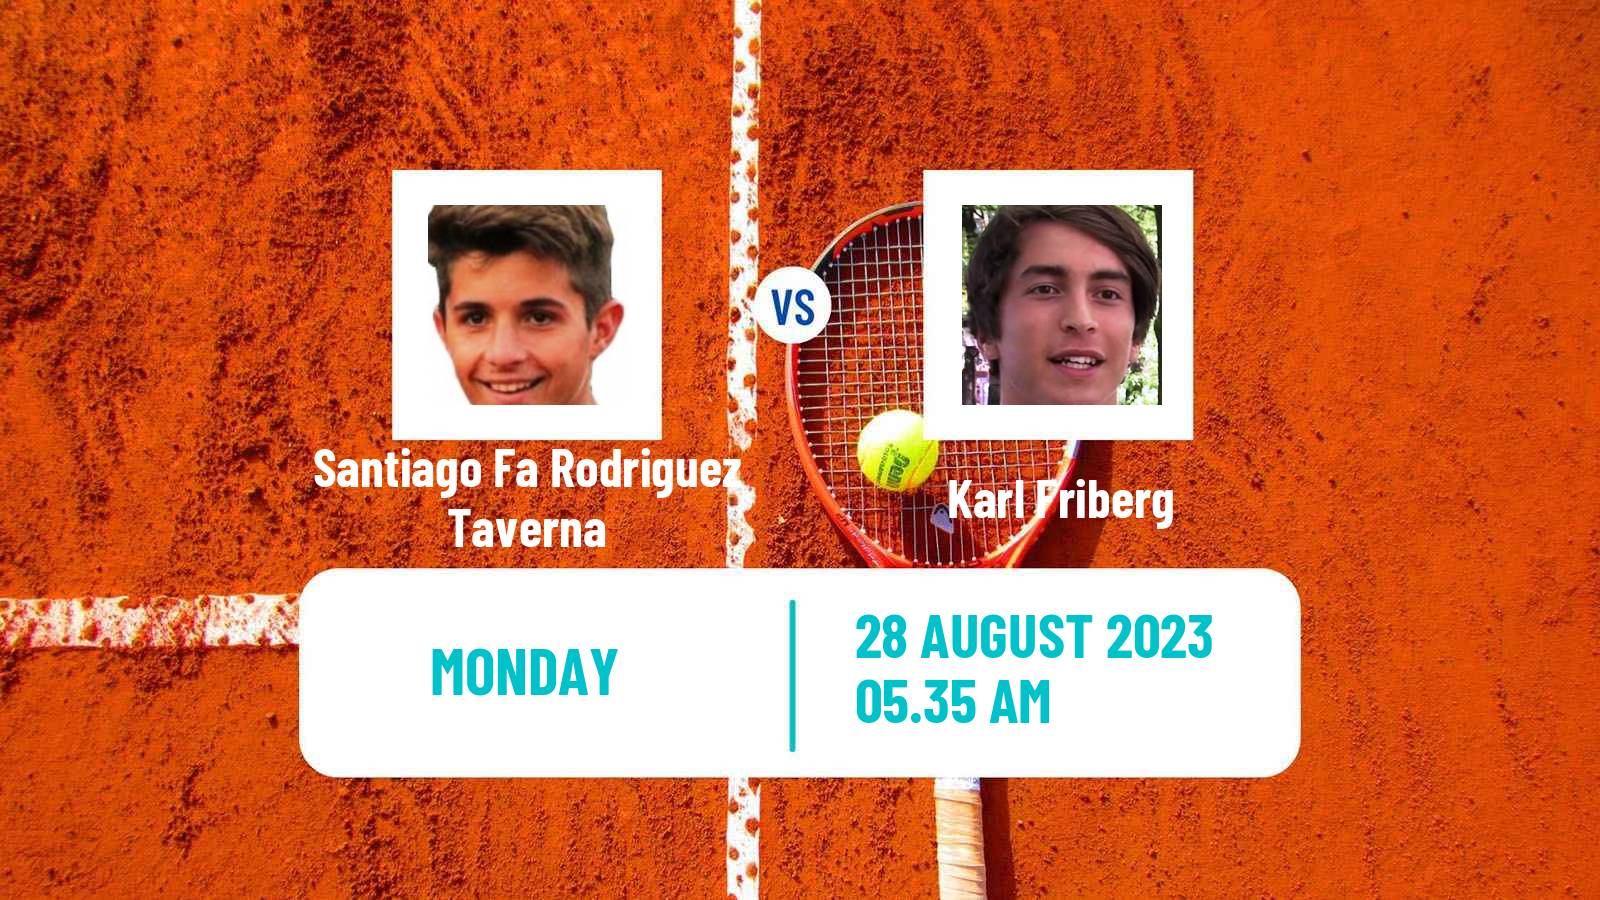 Tennis Como Challenger Men Santiago Fa Rodriguez Taverna - Karl Friberg